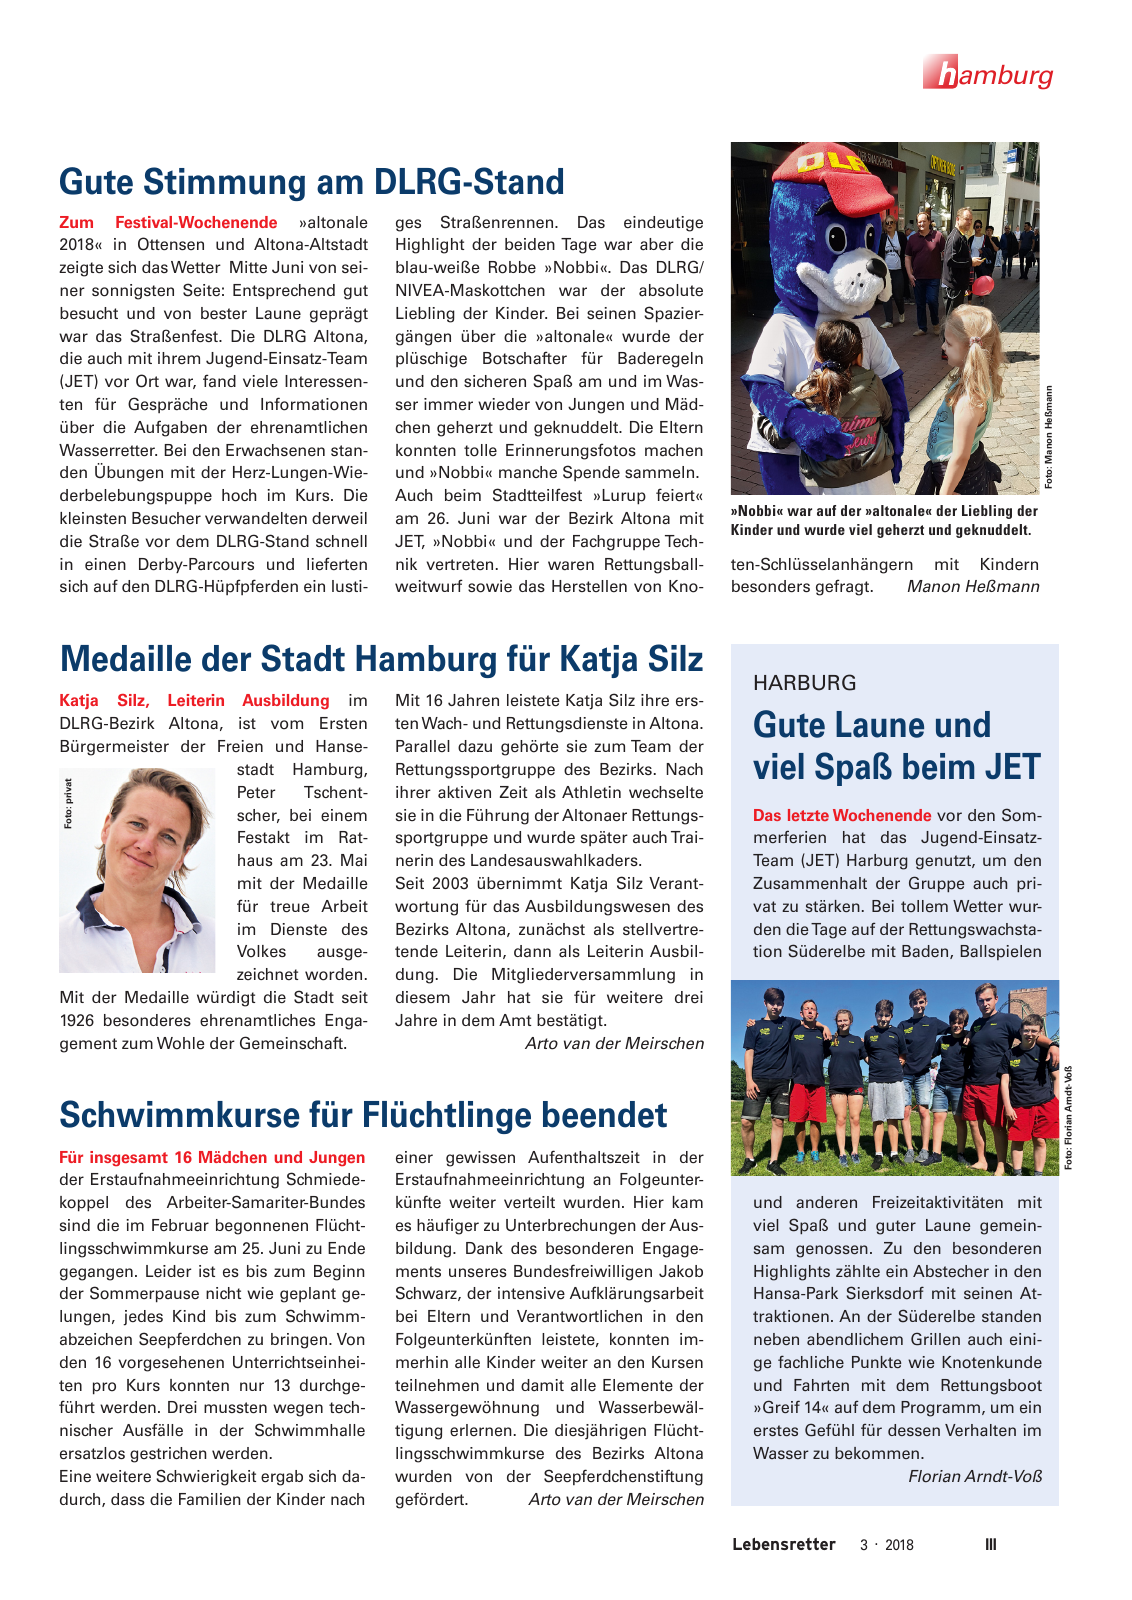 Vorschau Lebensretter 3/2018 - Regionalausgabe Hamburg Seite 5